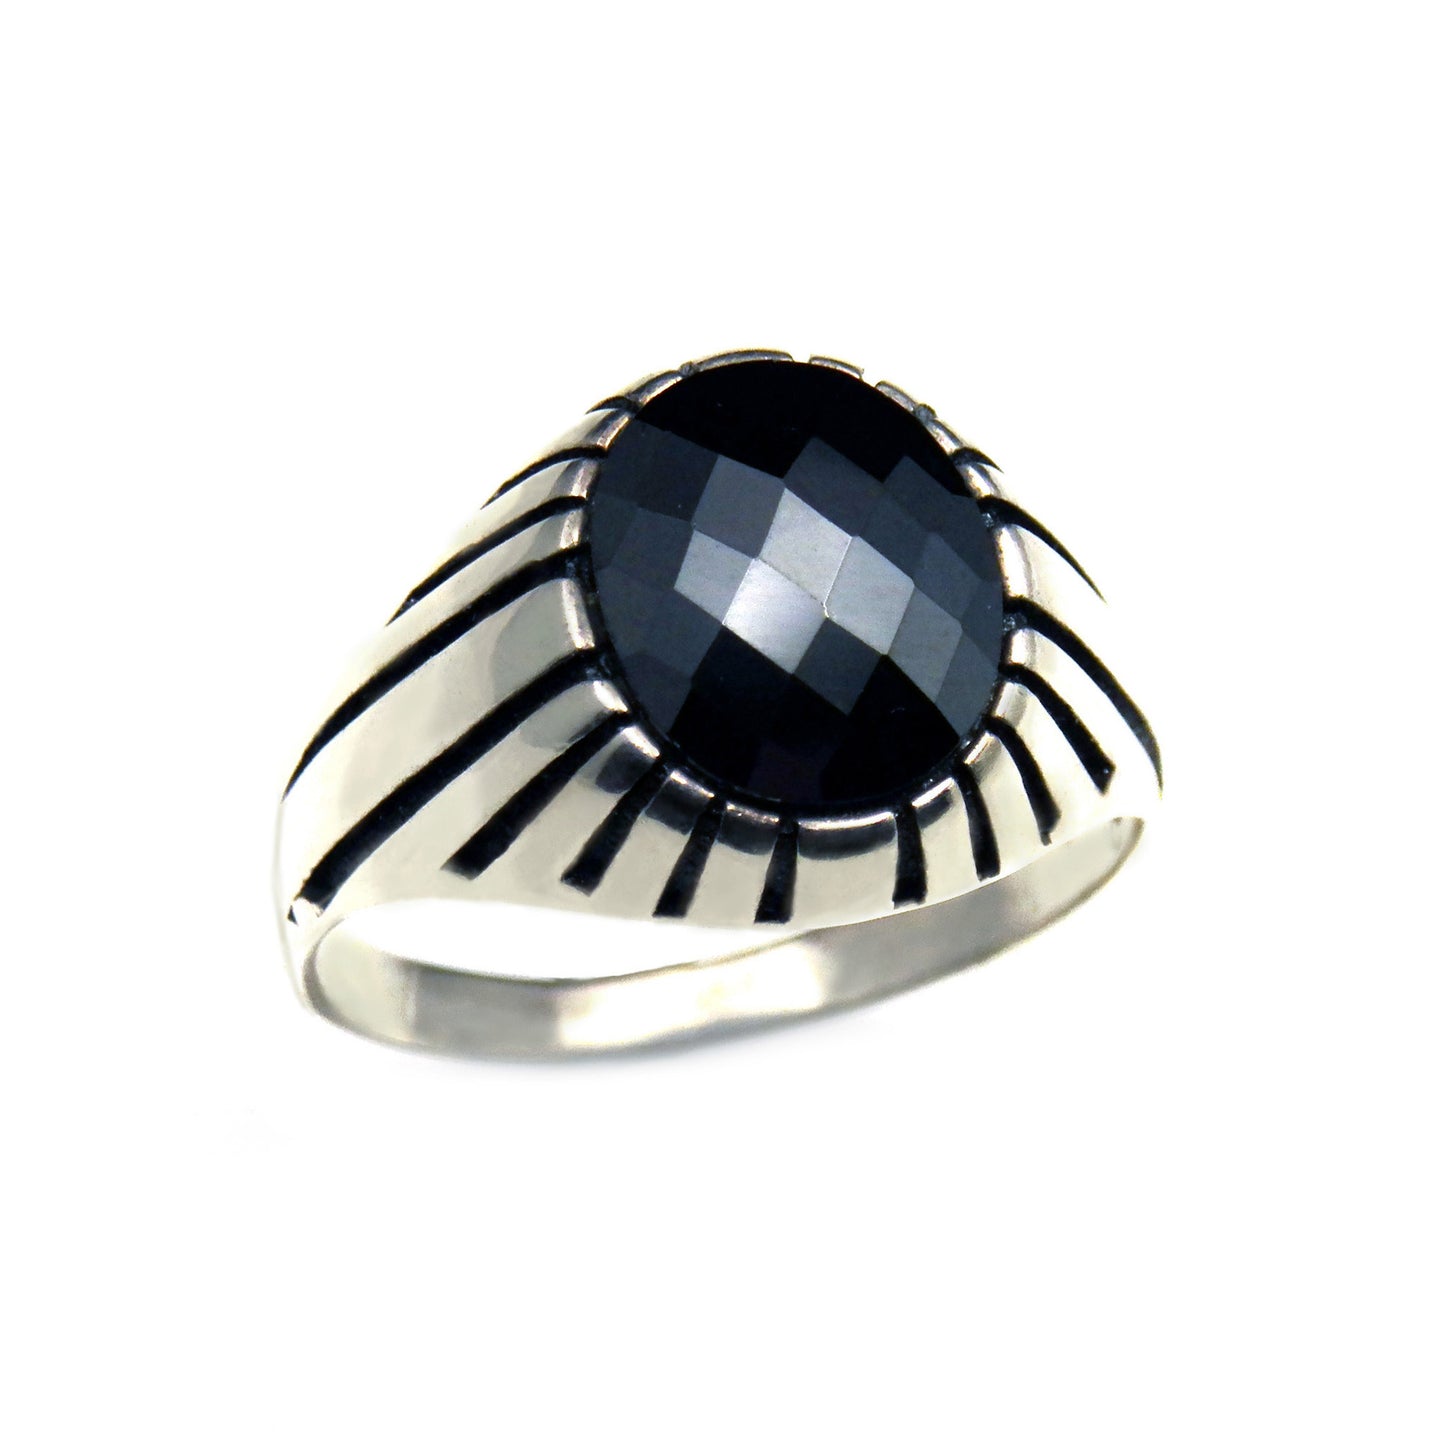 Sterling silver Black gemstone ring for men.